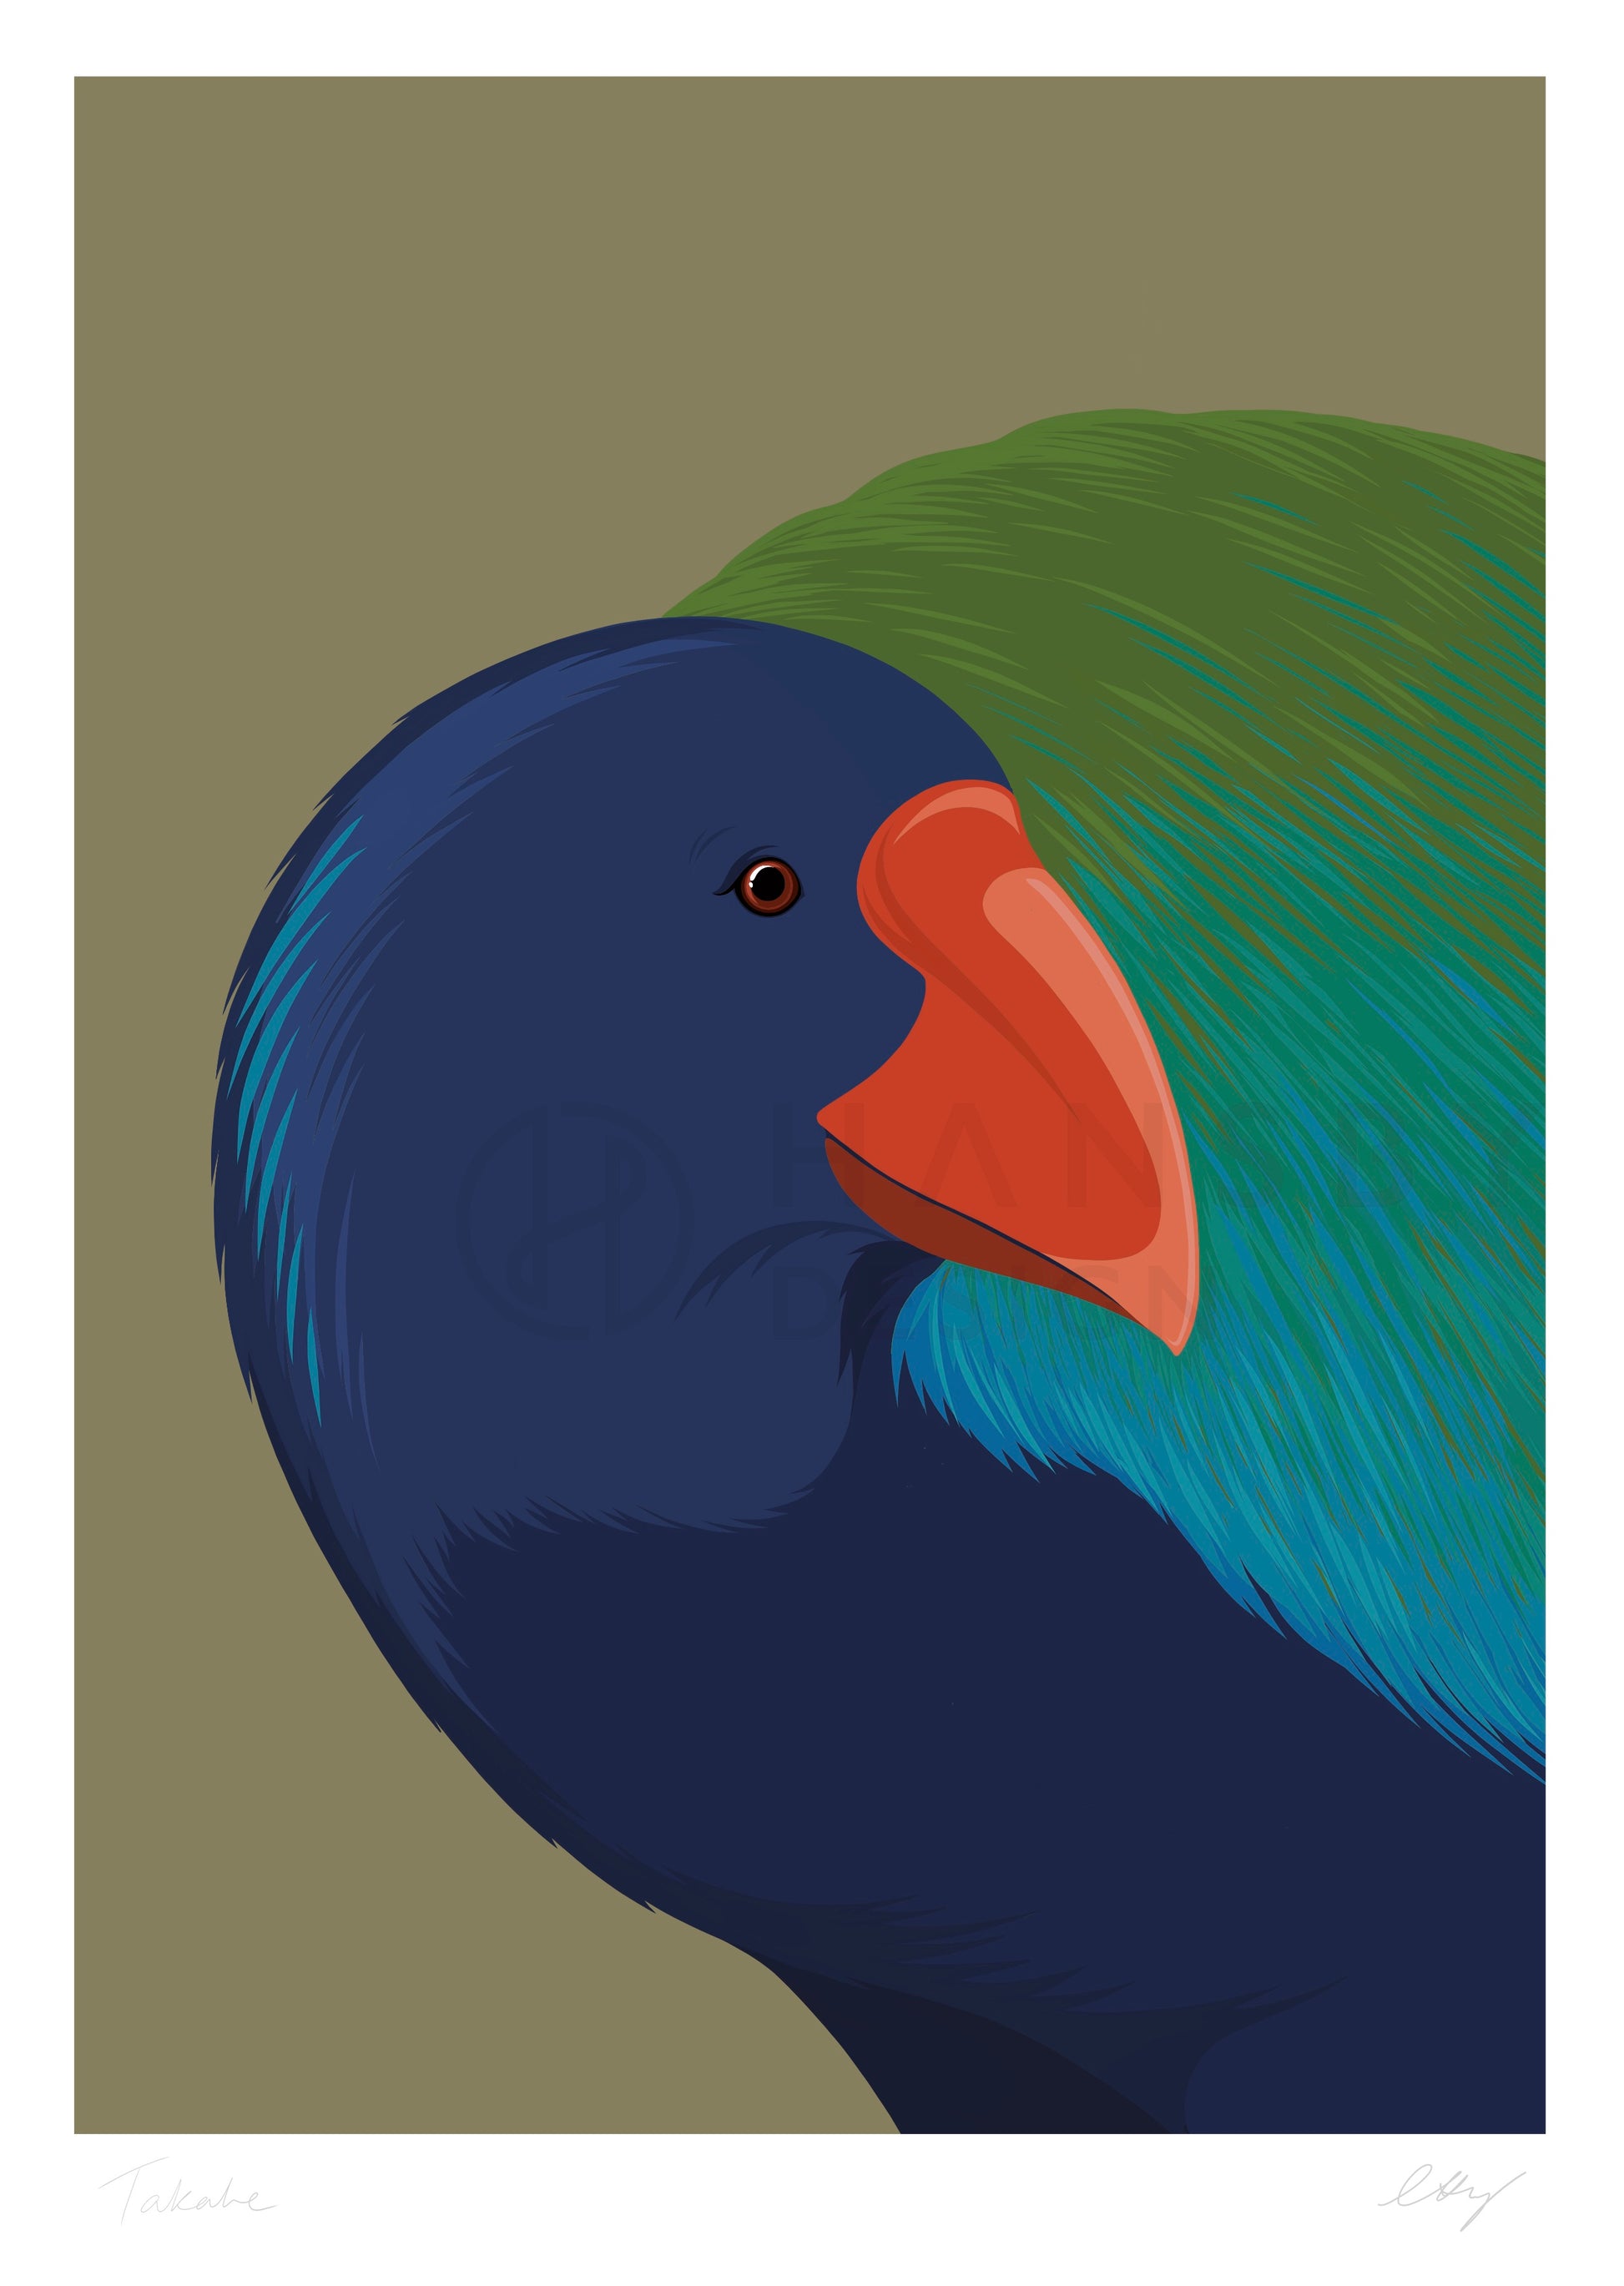 Takahe bird art print by Hansby Design New Zealand